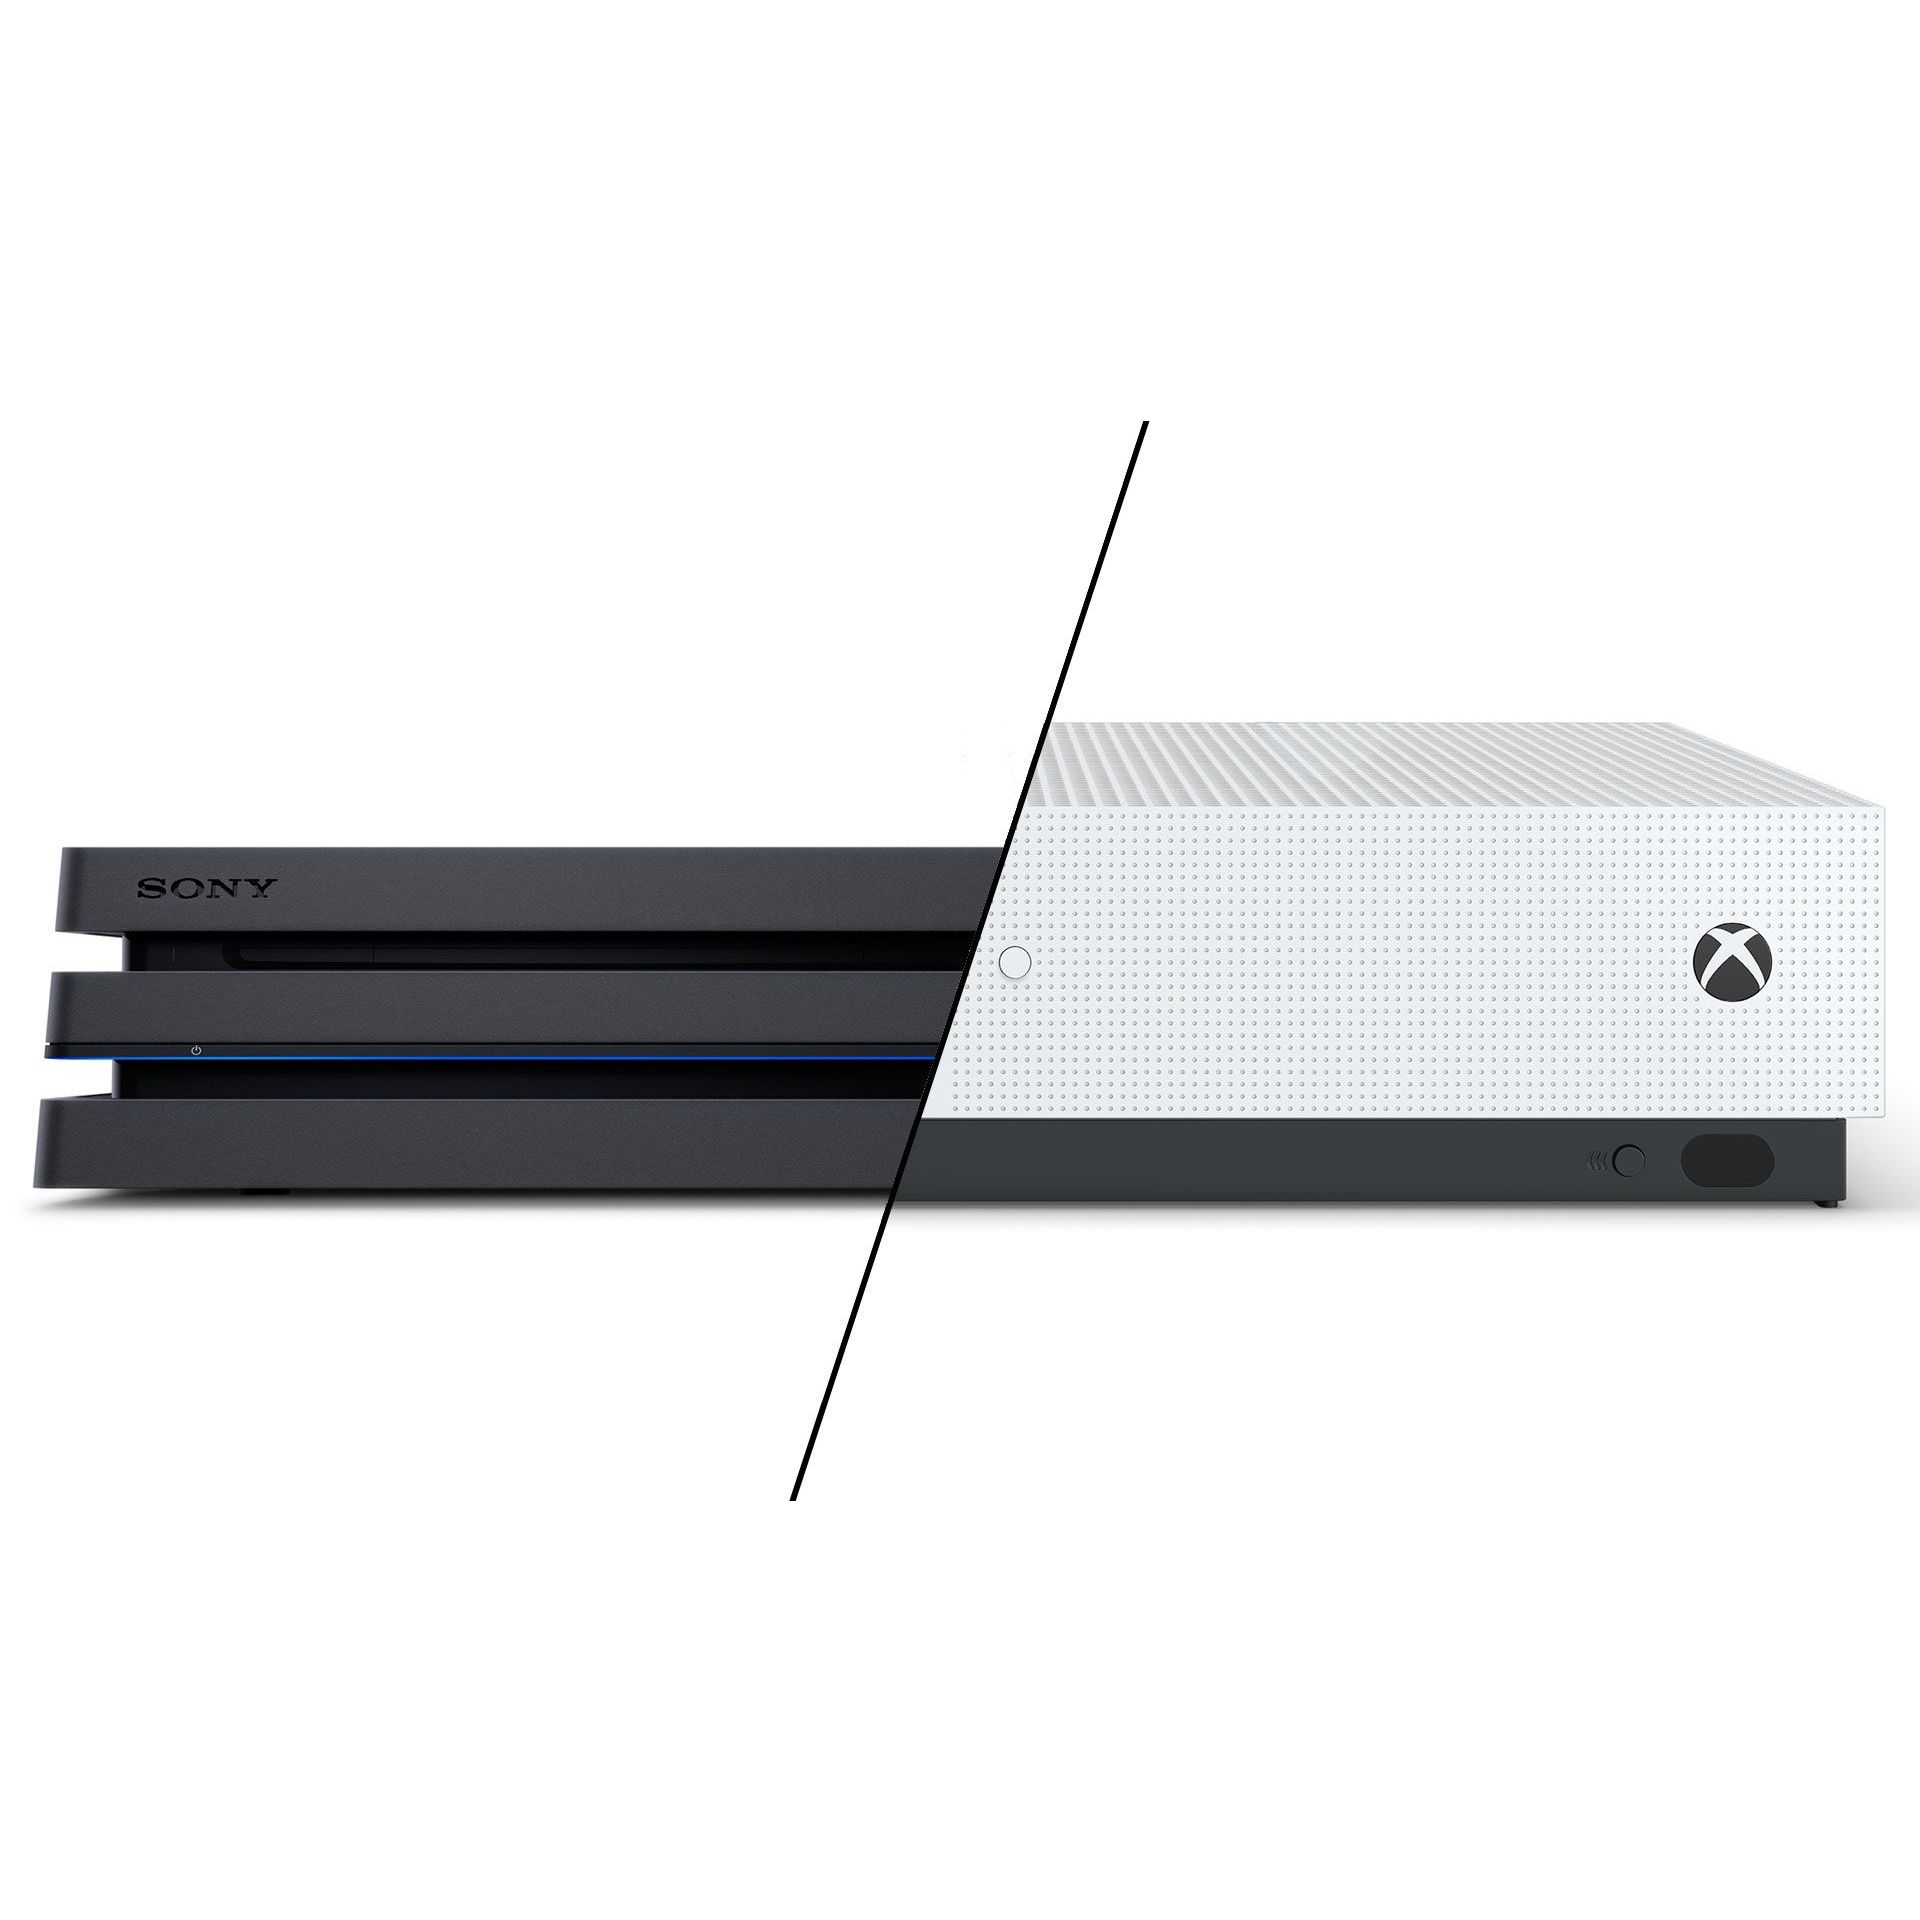 Diplomatie Sympathiek Politiek PS4 Pro vs Xbox One X – Which console should you buy?